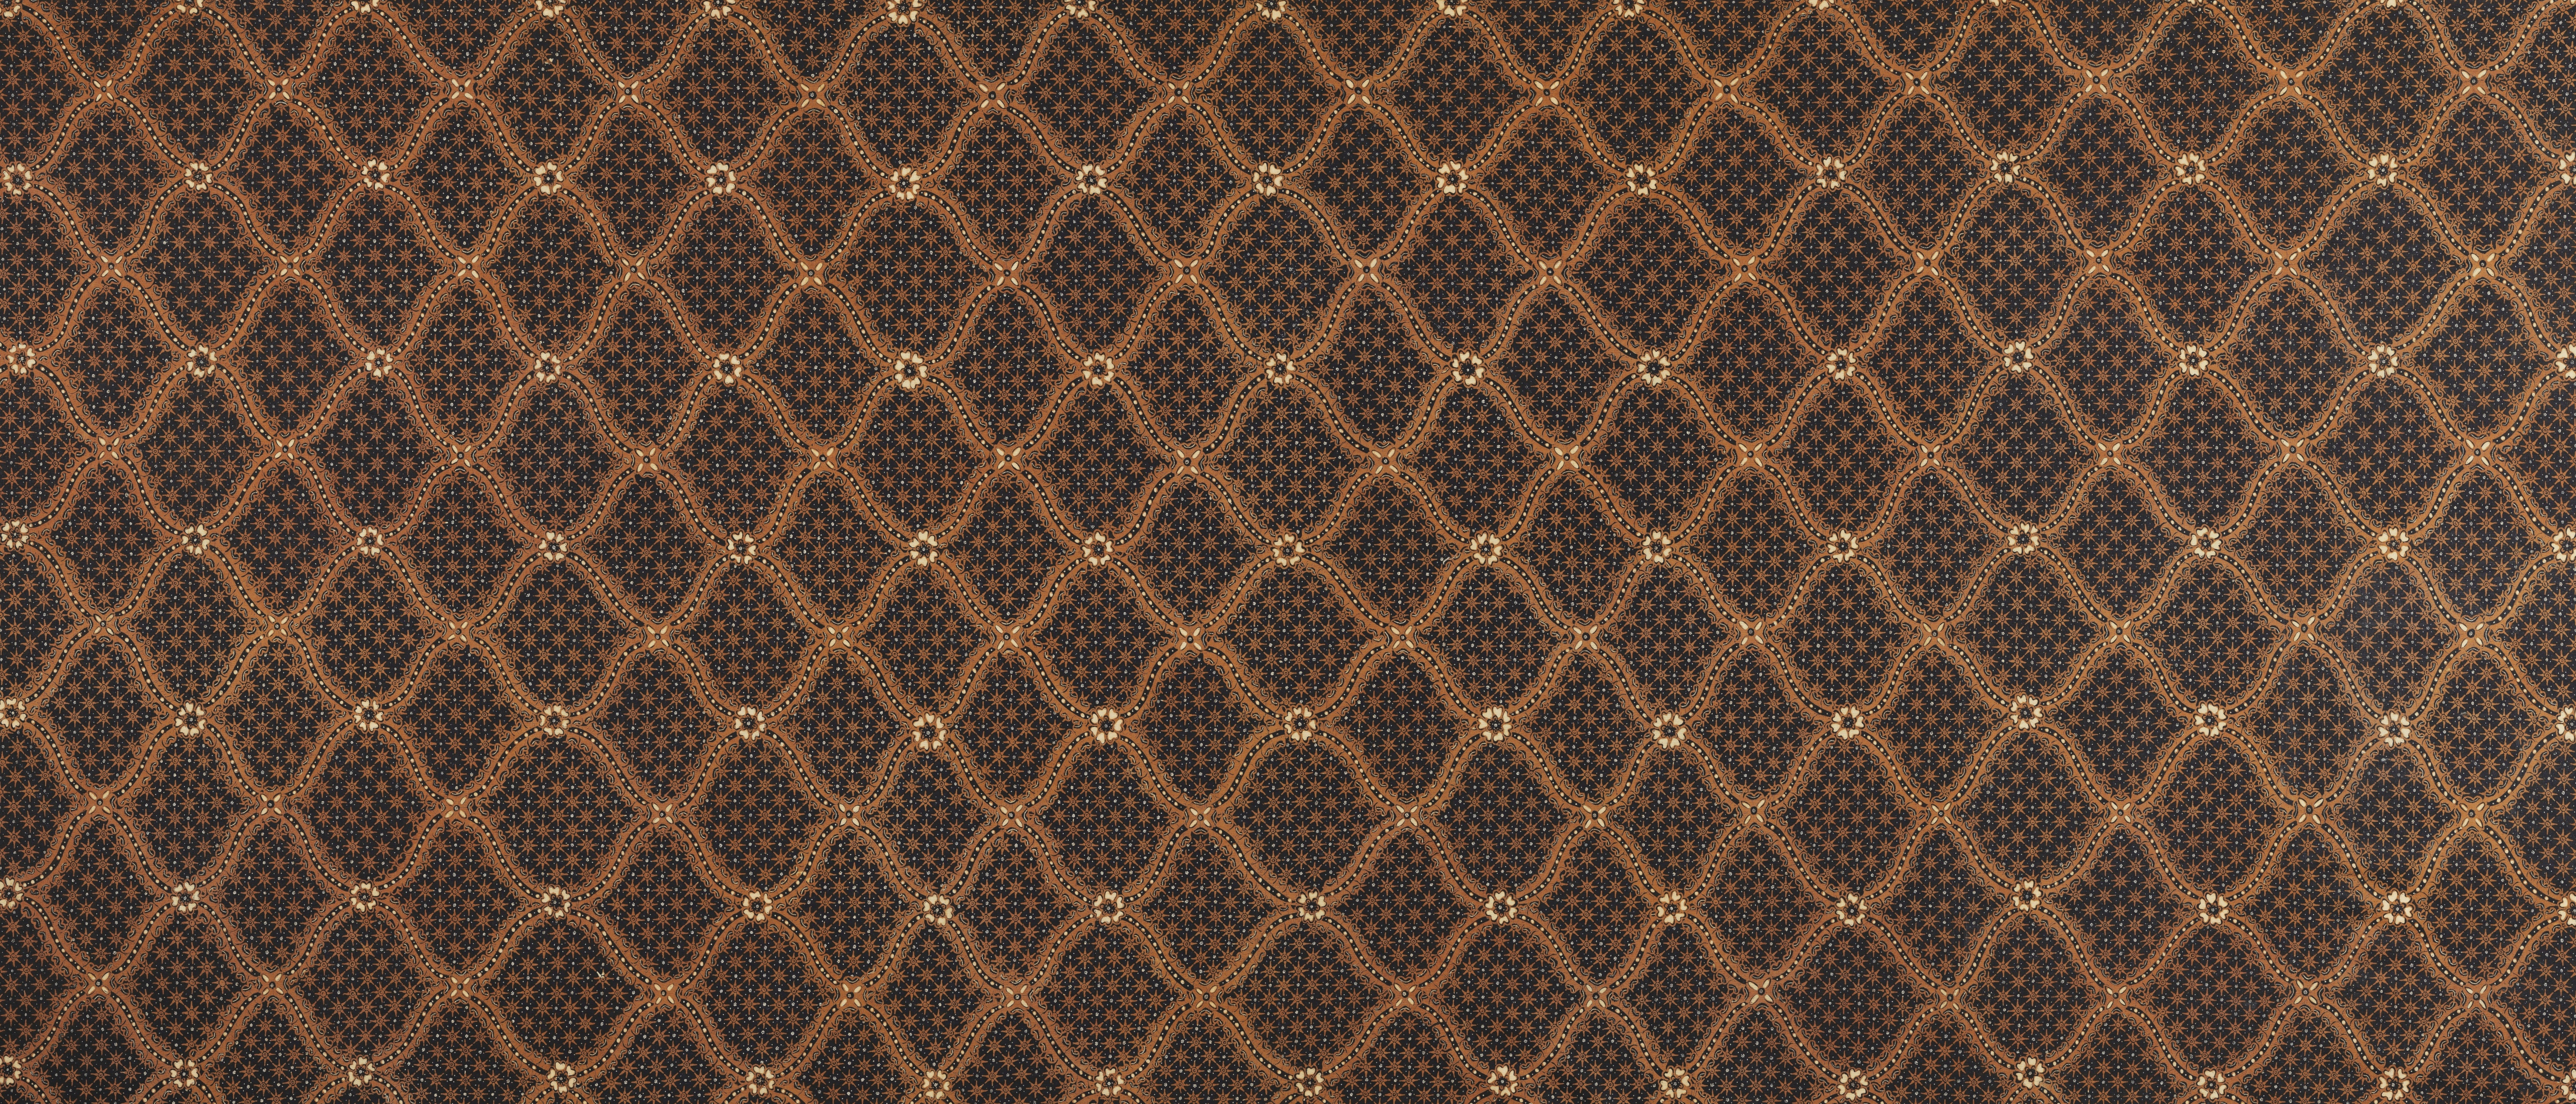 Texture Fabric Ultra Wide Ultrawide Pattern 6049x2593